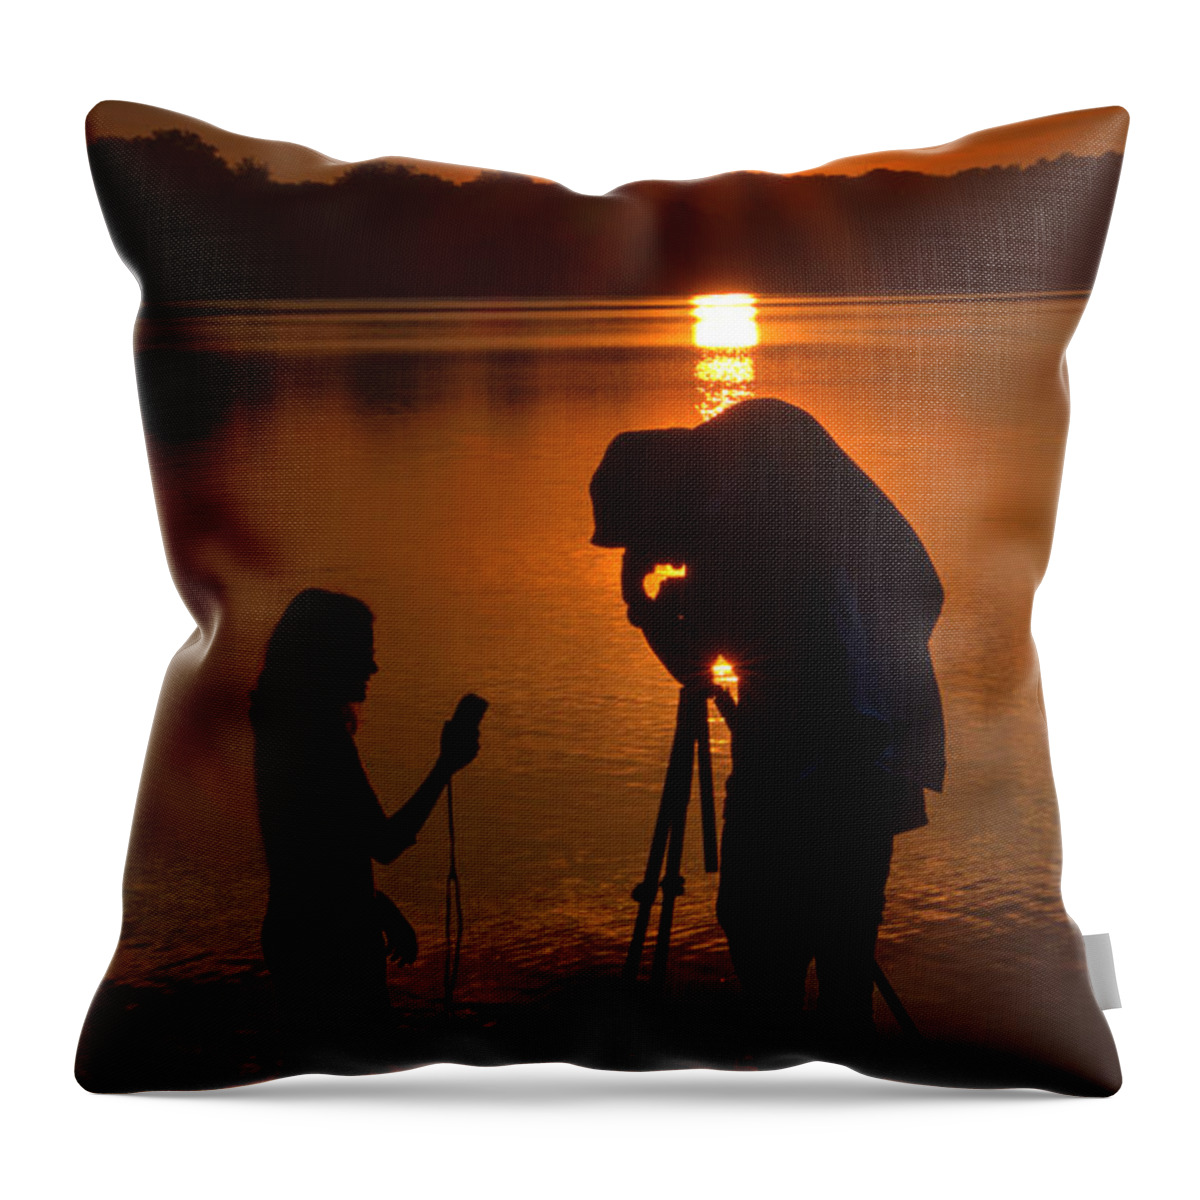 Sunset Throw Pillow featuring the photograph Stolen Moment by ELDavis Photography